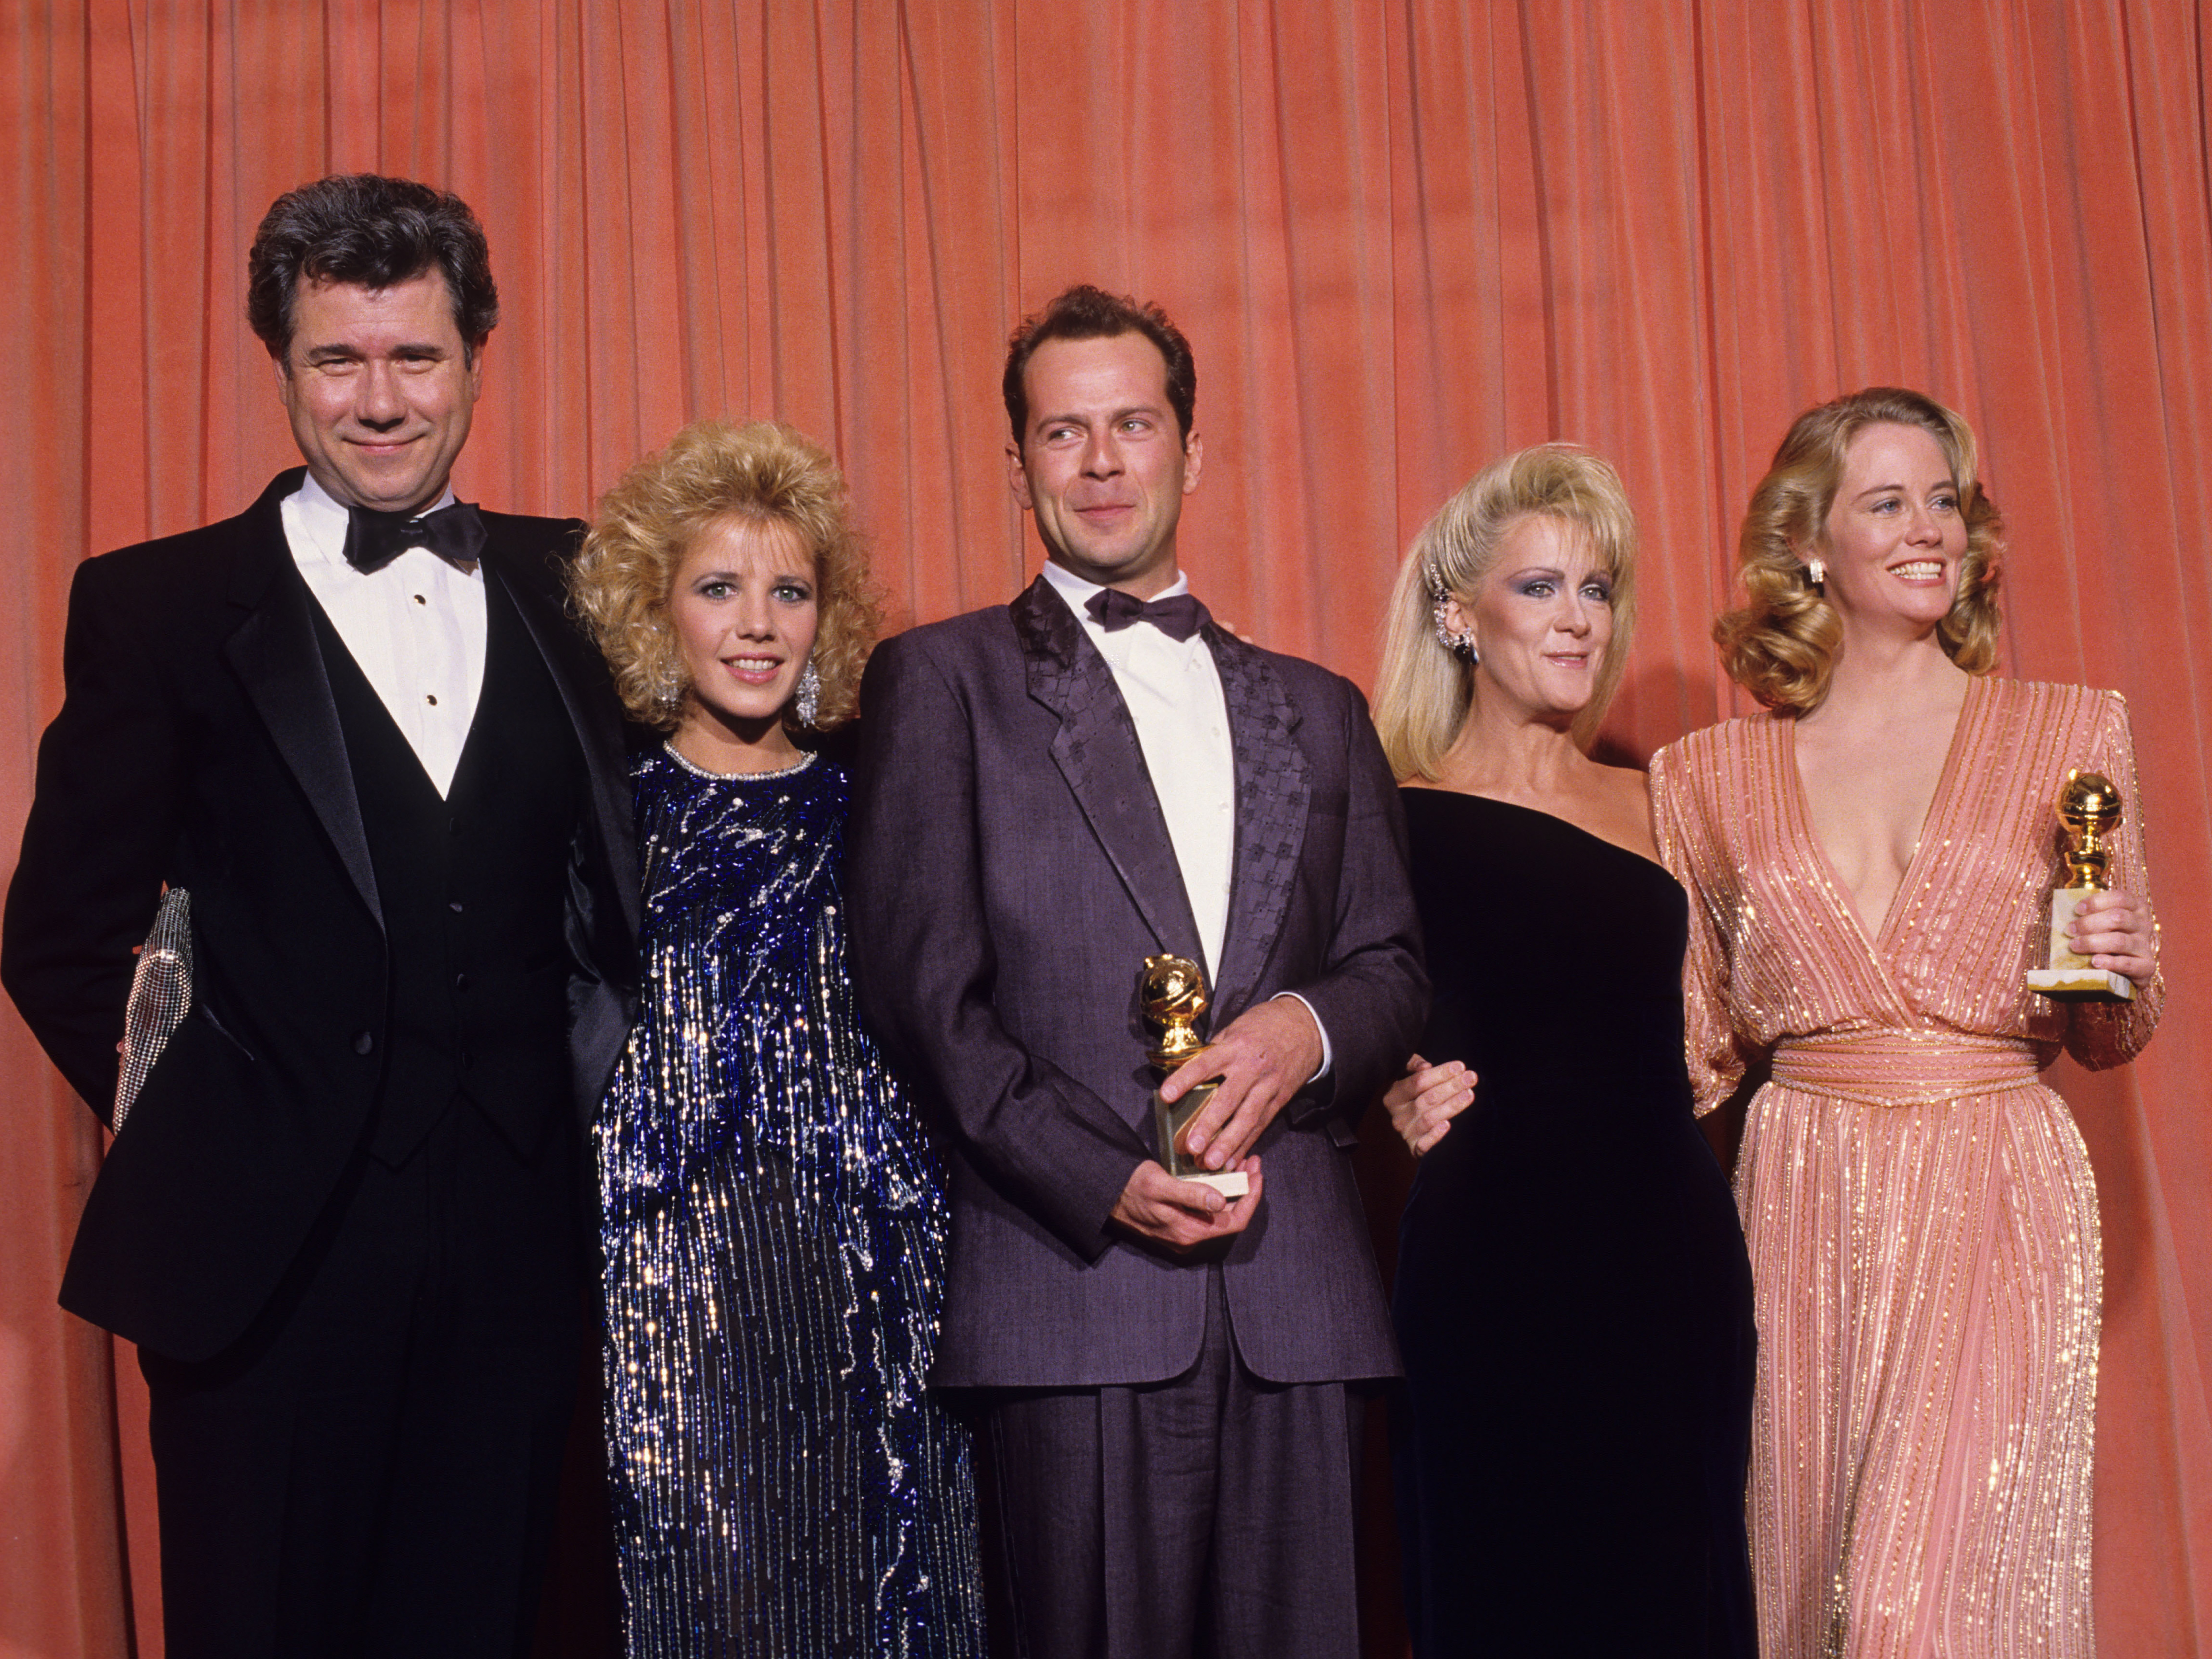 1987 Bruce Willis, Cybill Shepherd, John Larroquette, Heidi Bohay, and Joan Van Ark, 44th Golden Globes